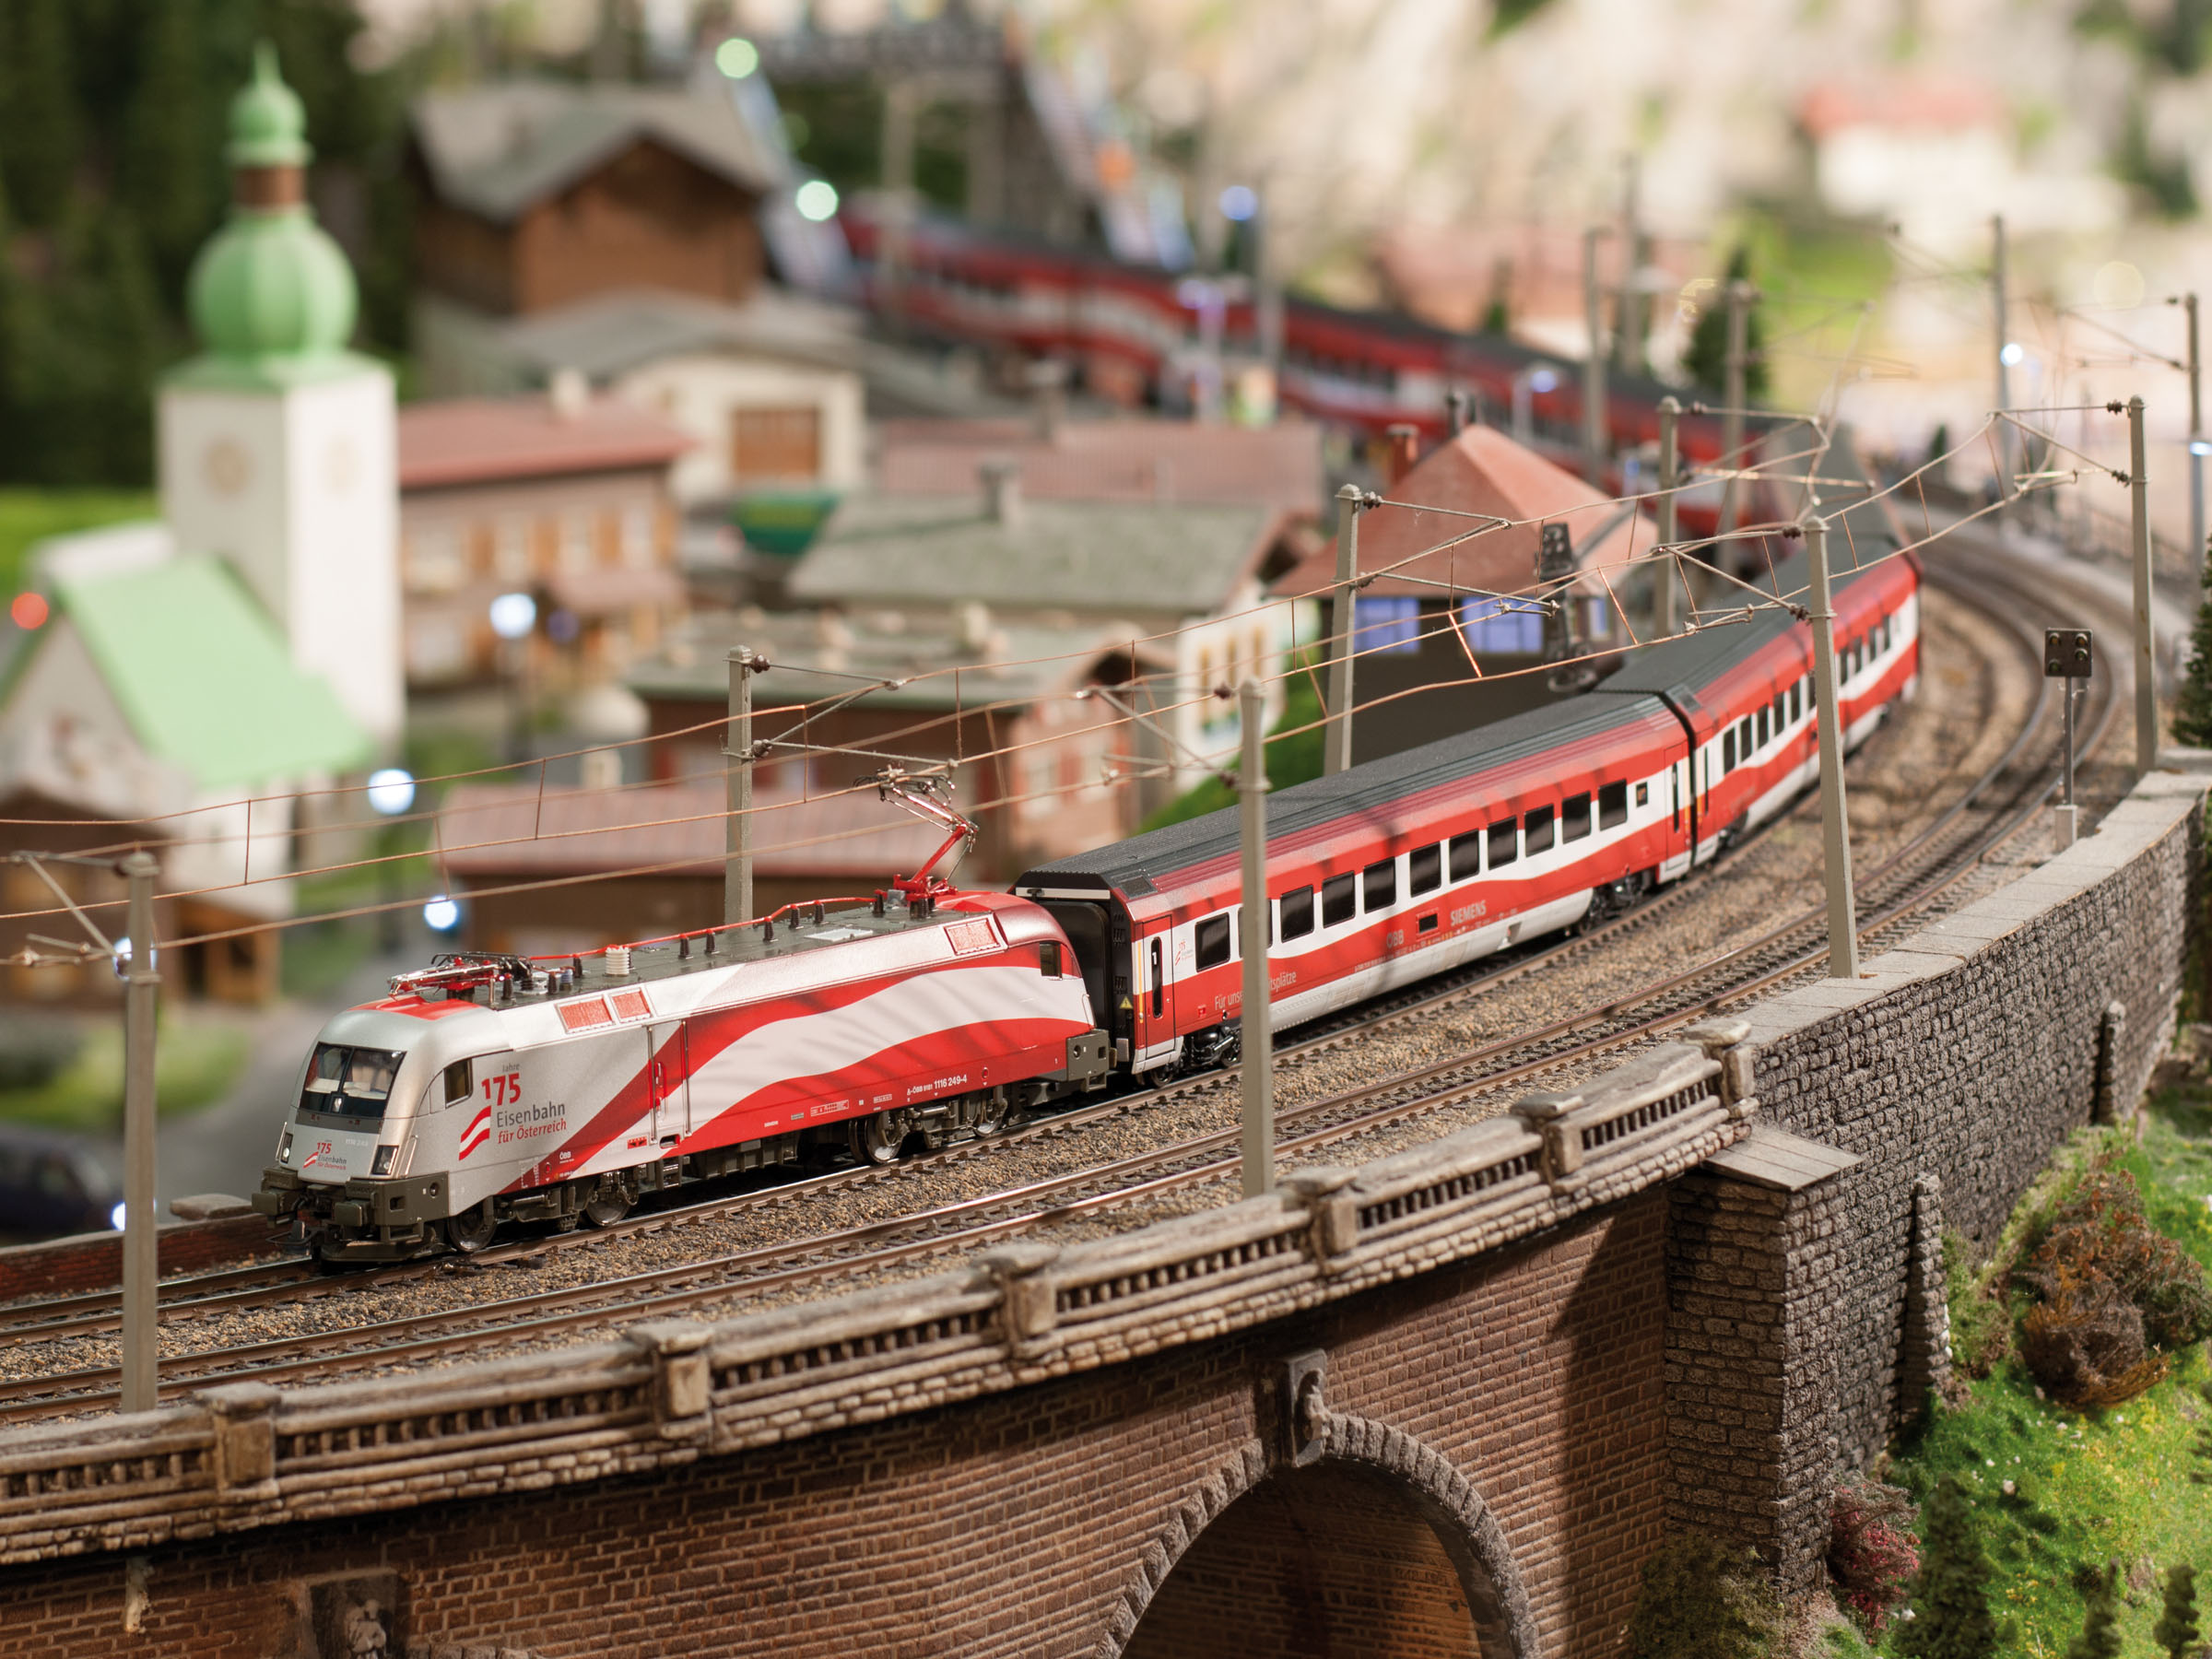 pienoisrautatie, Макет залізниці, Моделі поїздів - Fascinating video of the world’s largest HO scale model railway layout - Miniatur Wunderland Germany